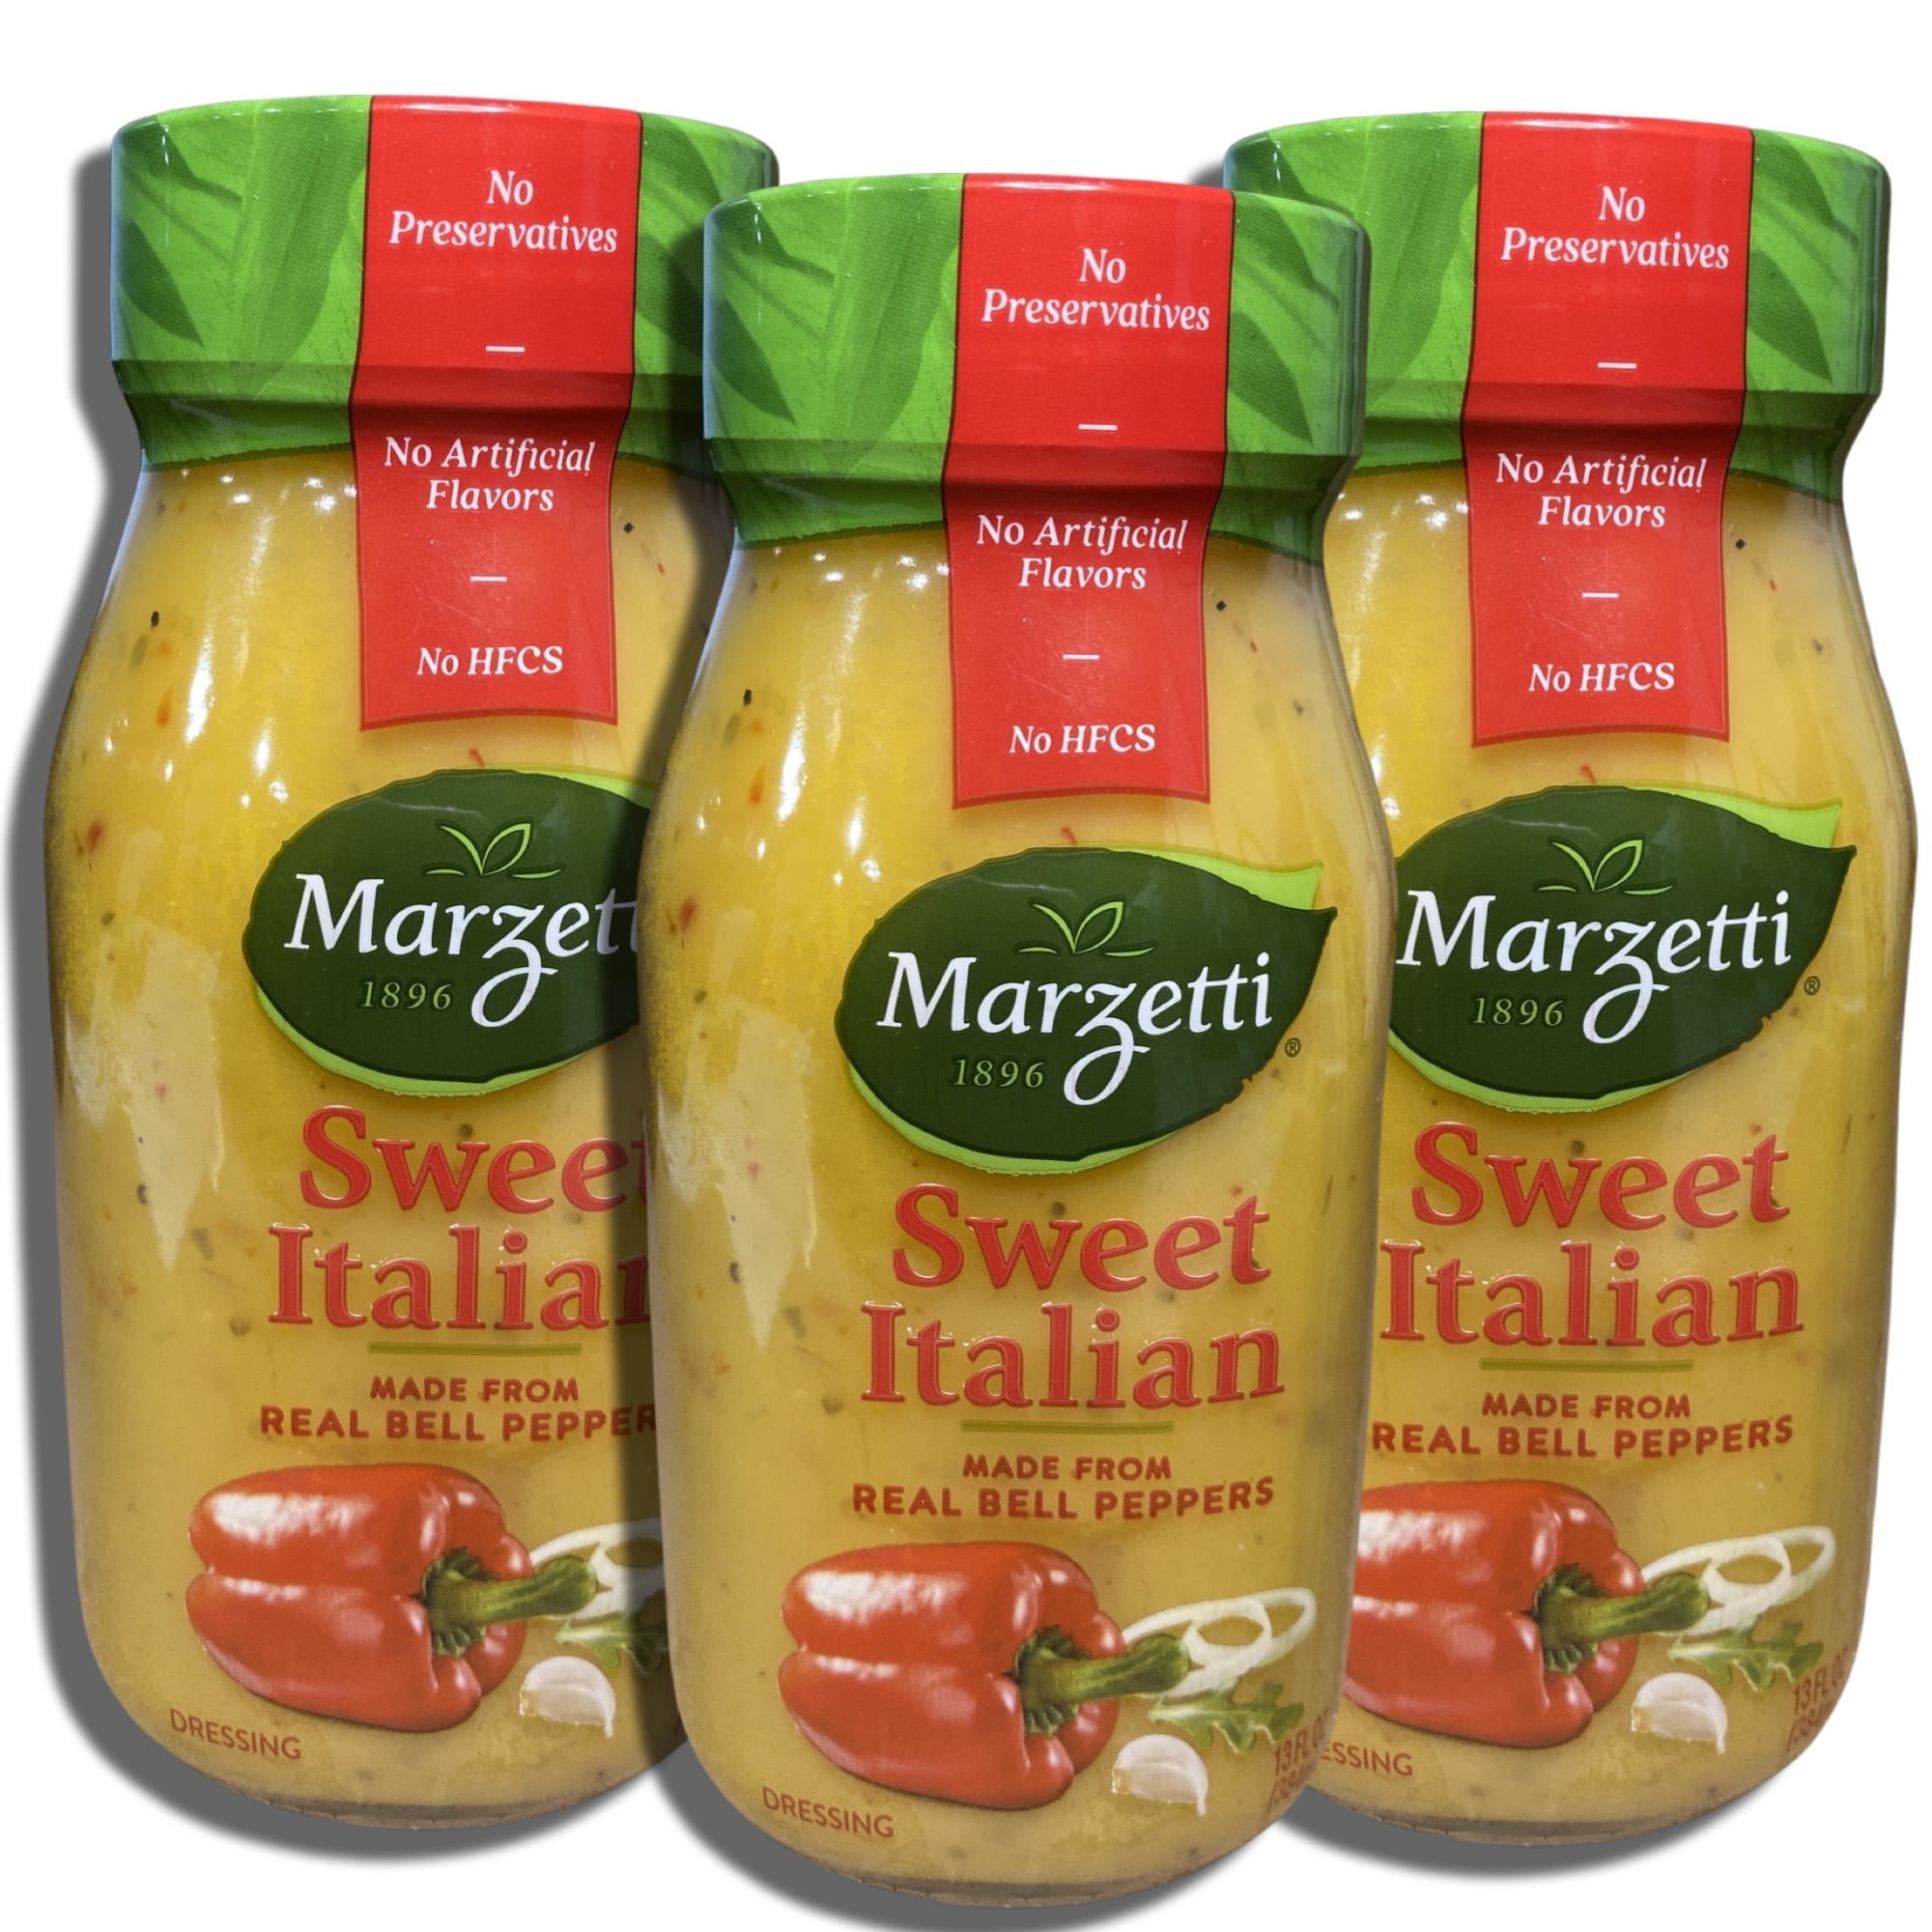 marzetti sweet italian dressing